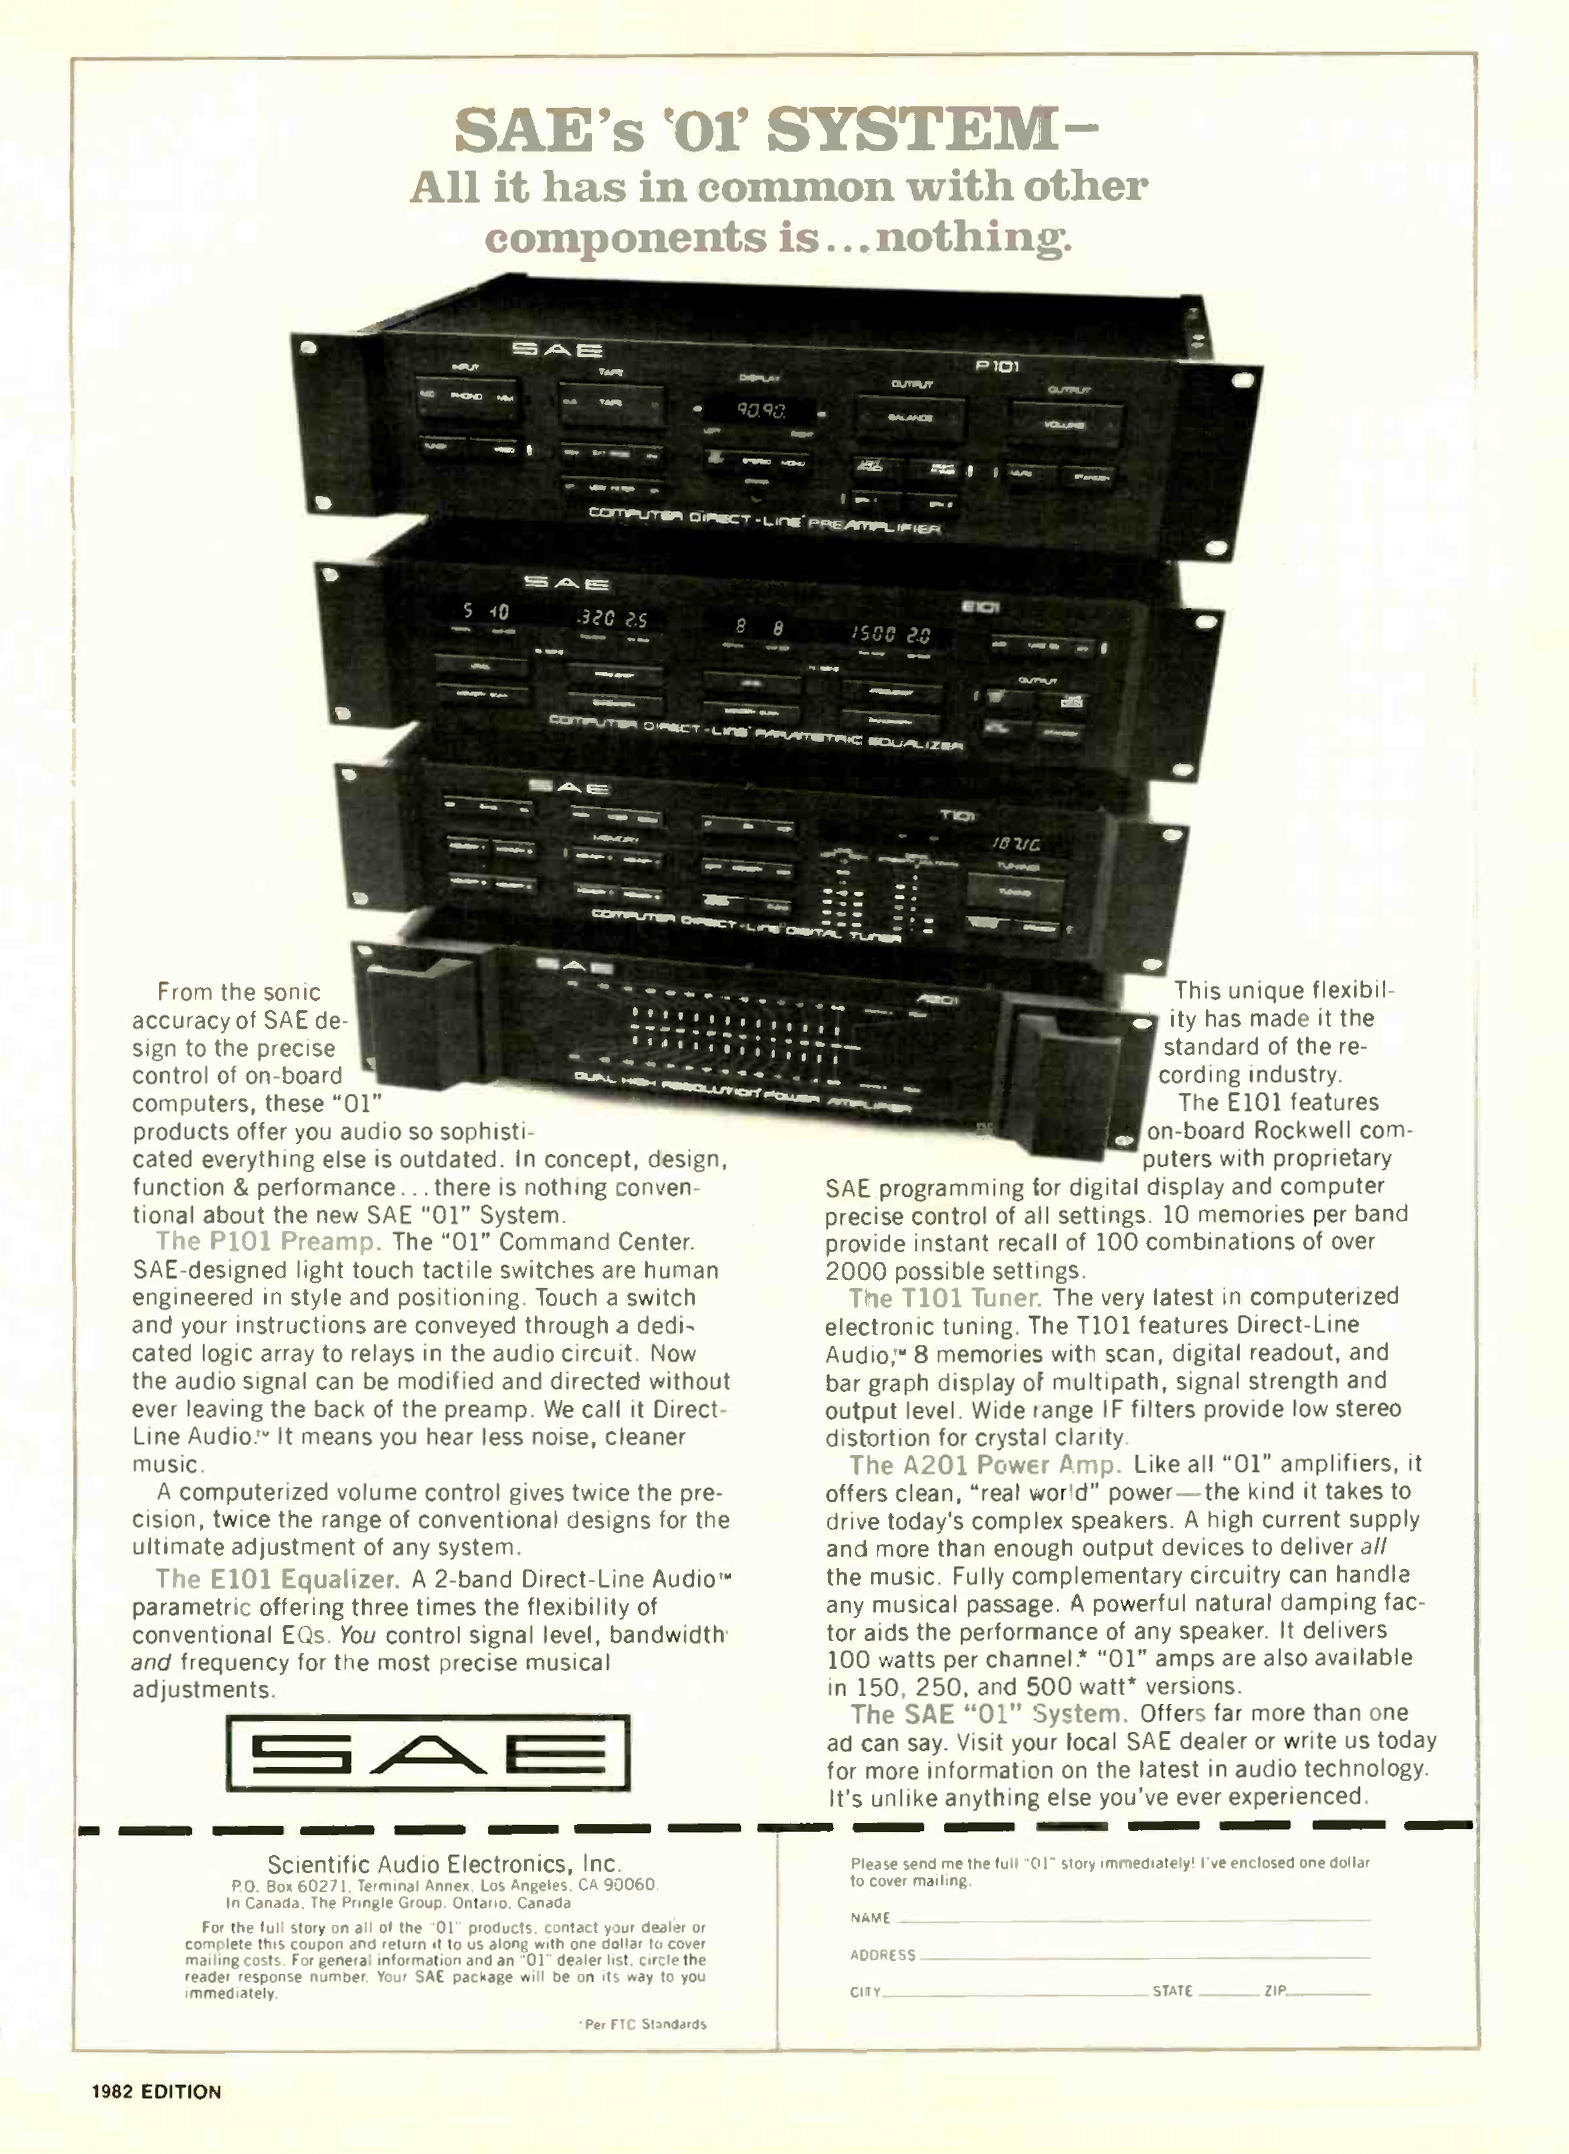 SAE System-01-Werbung-1982.jpg